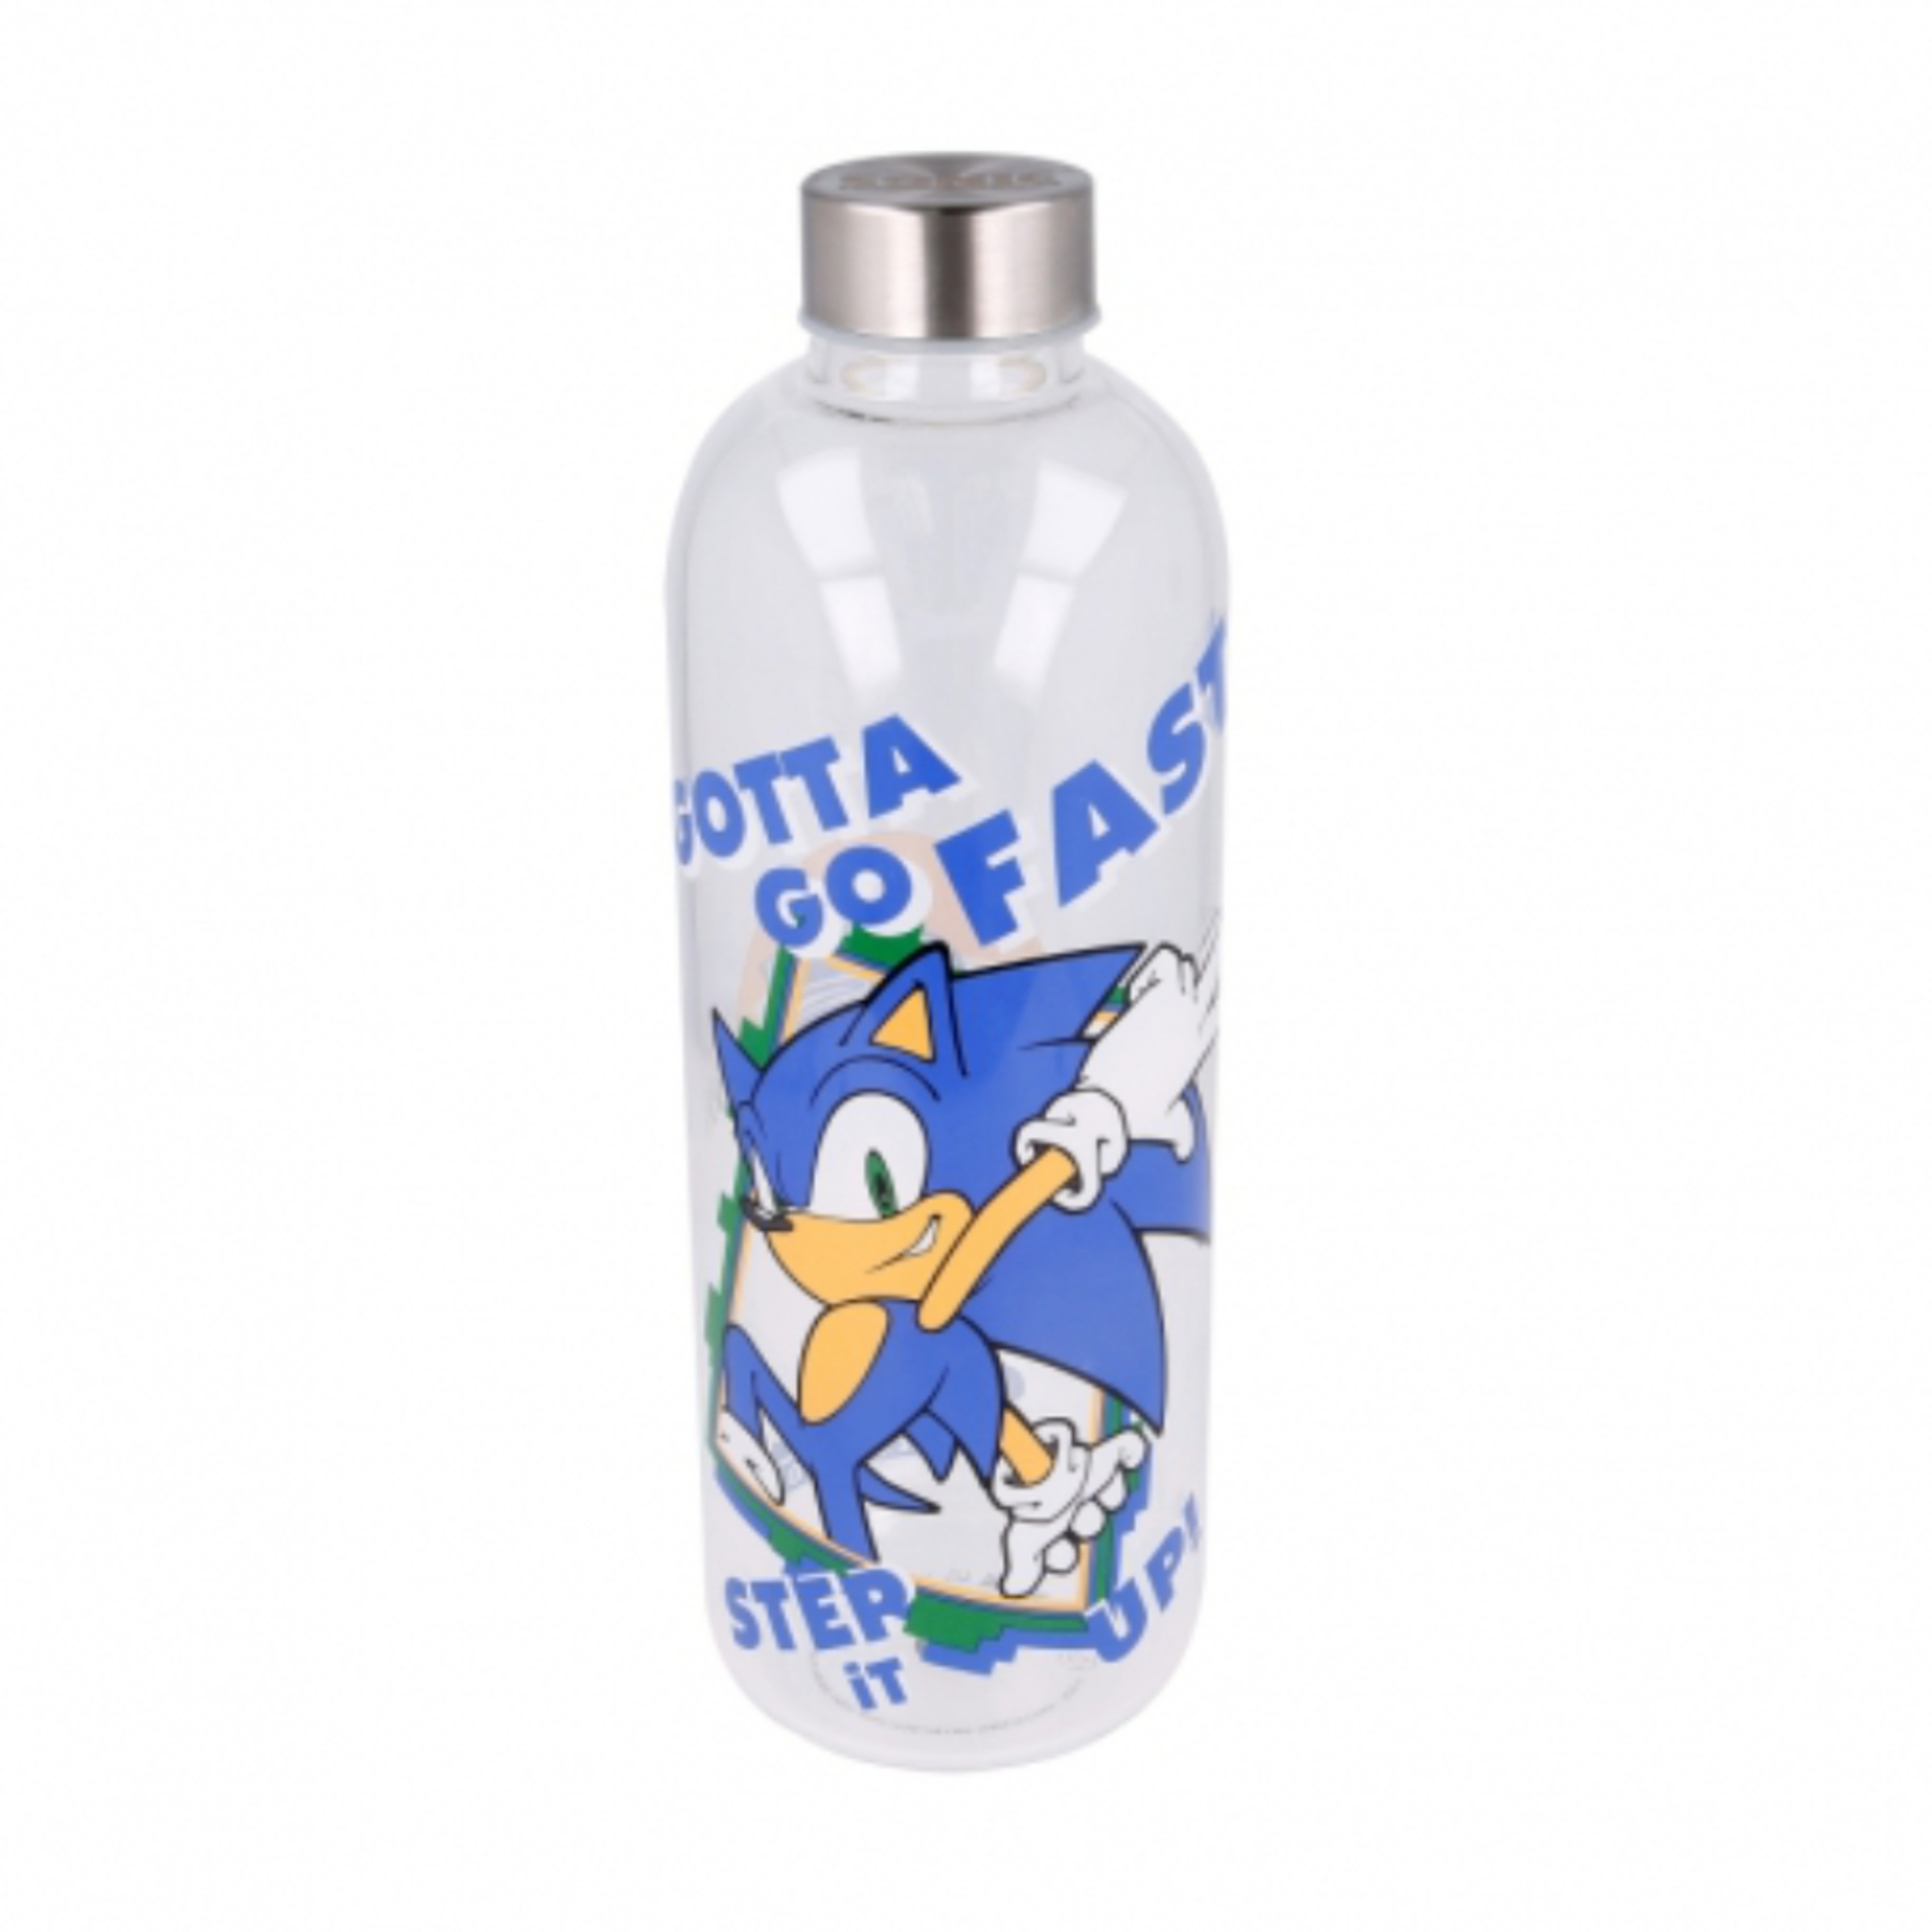 Botella Sonic 65730 - transparente - 